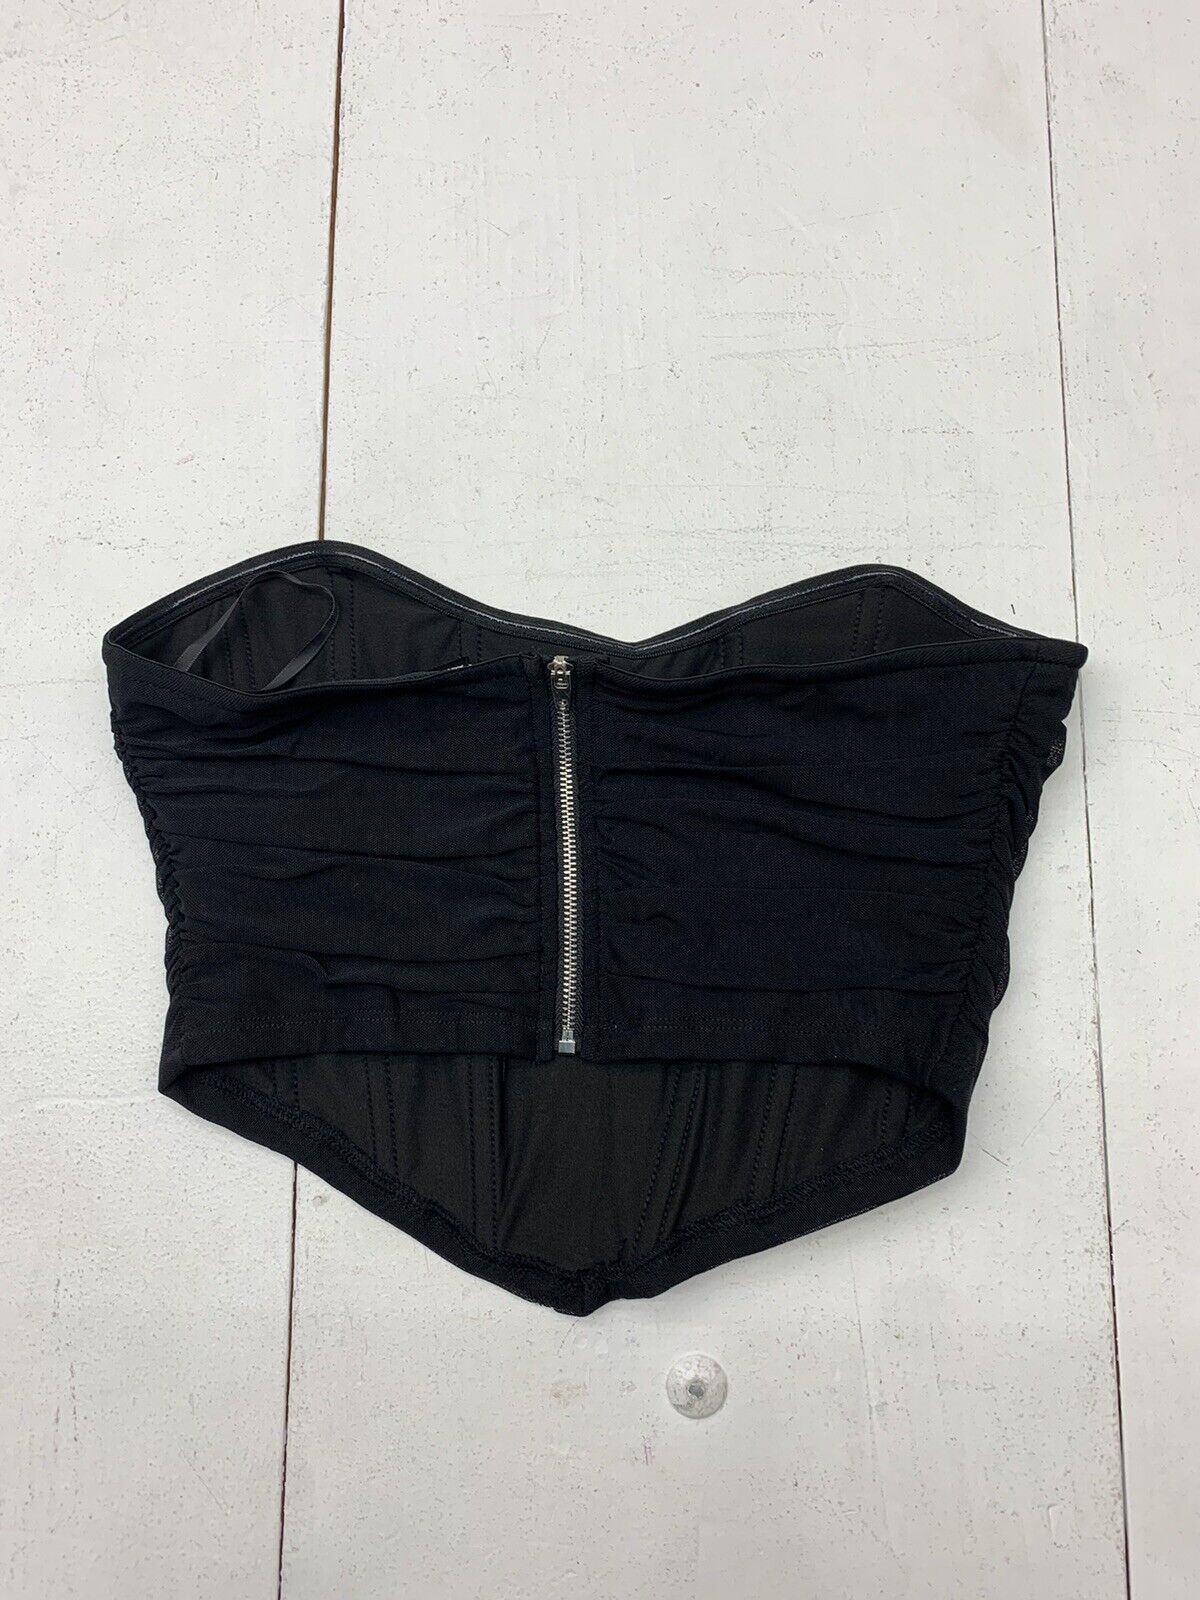 Shein Womens Black Cropped Corset Top Size Medium - beyond exchange